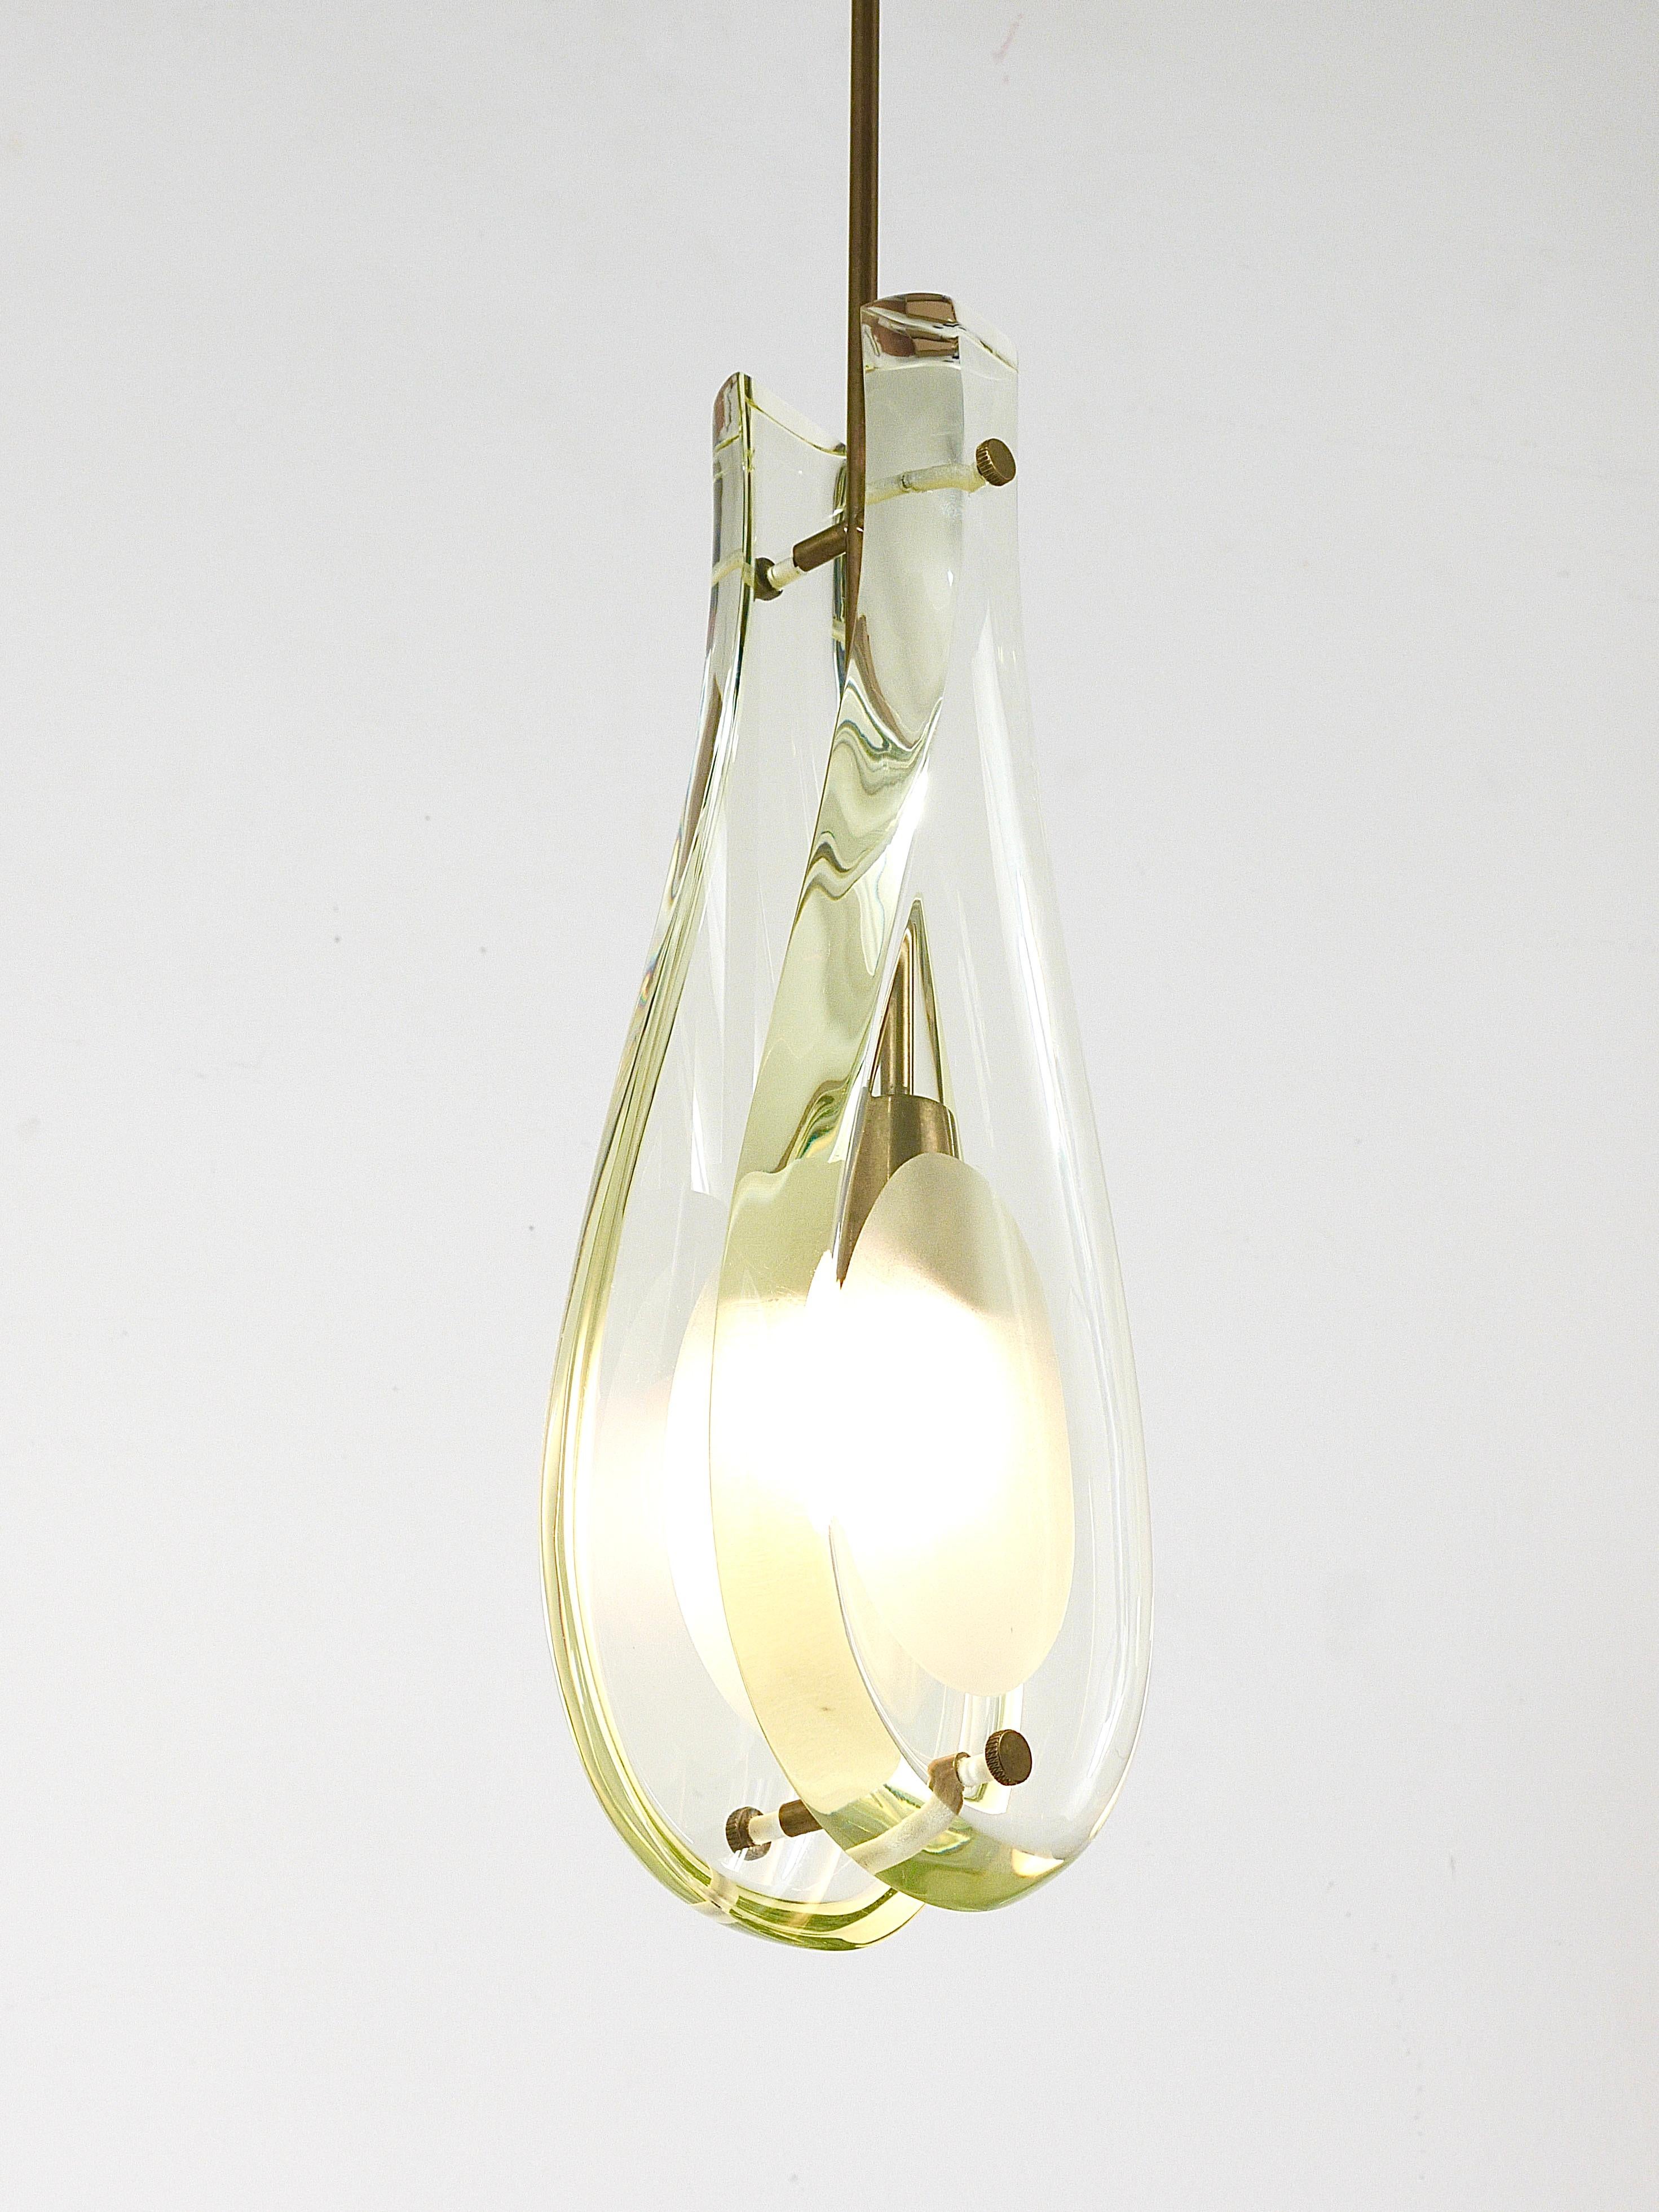 Max Ingrad For Fontana Arte Drop Pendant Lamp, Model 2259, Italy, 1960s For Sale 12